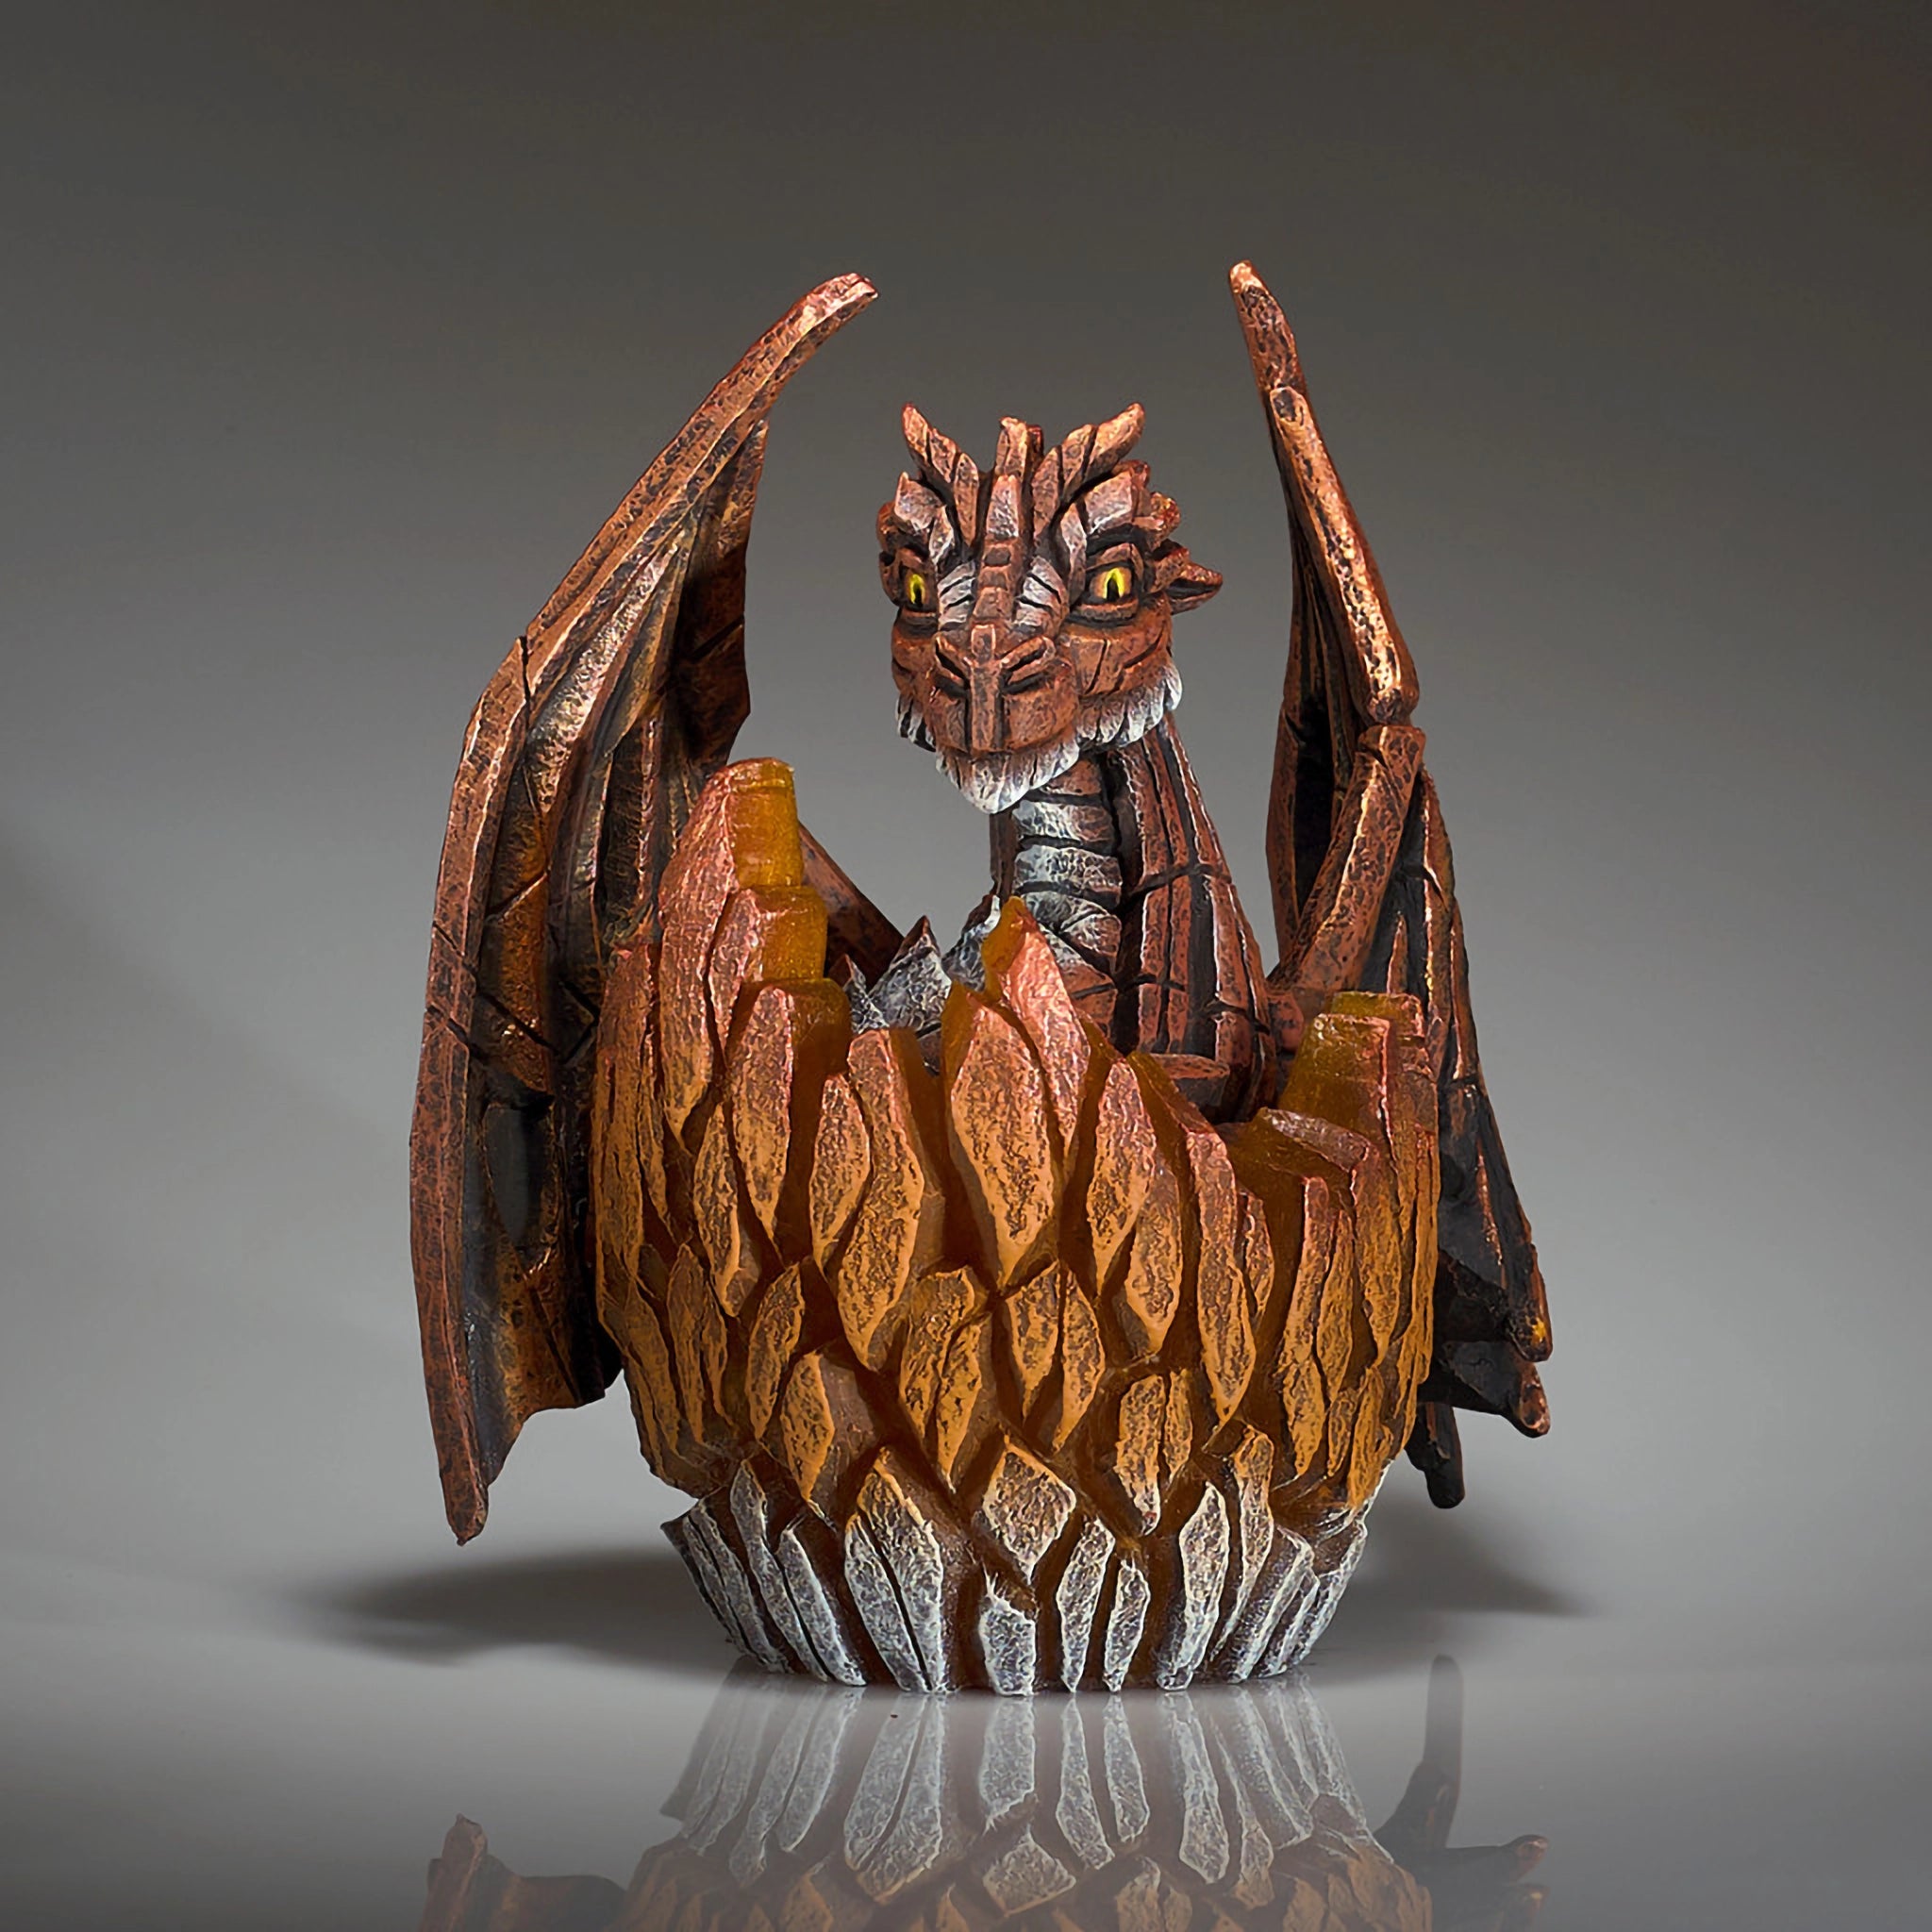 A modern sculpture of a baby dragon hatching from an egg 